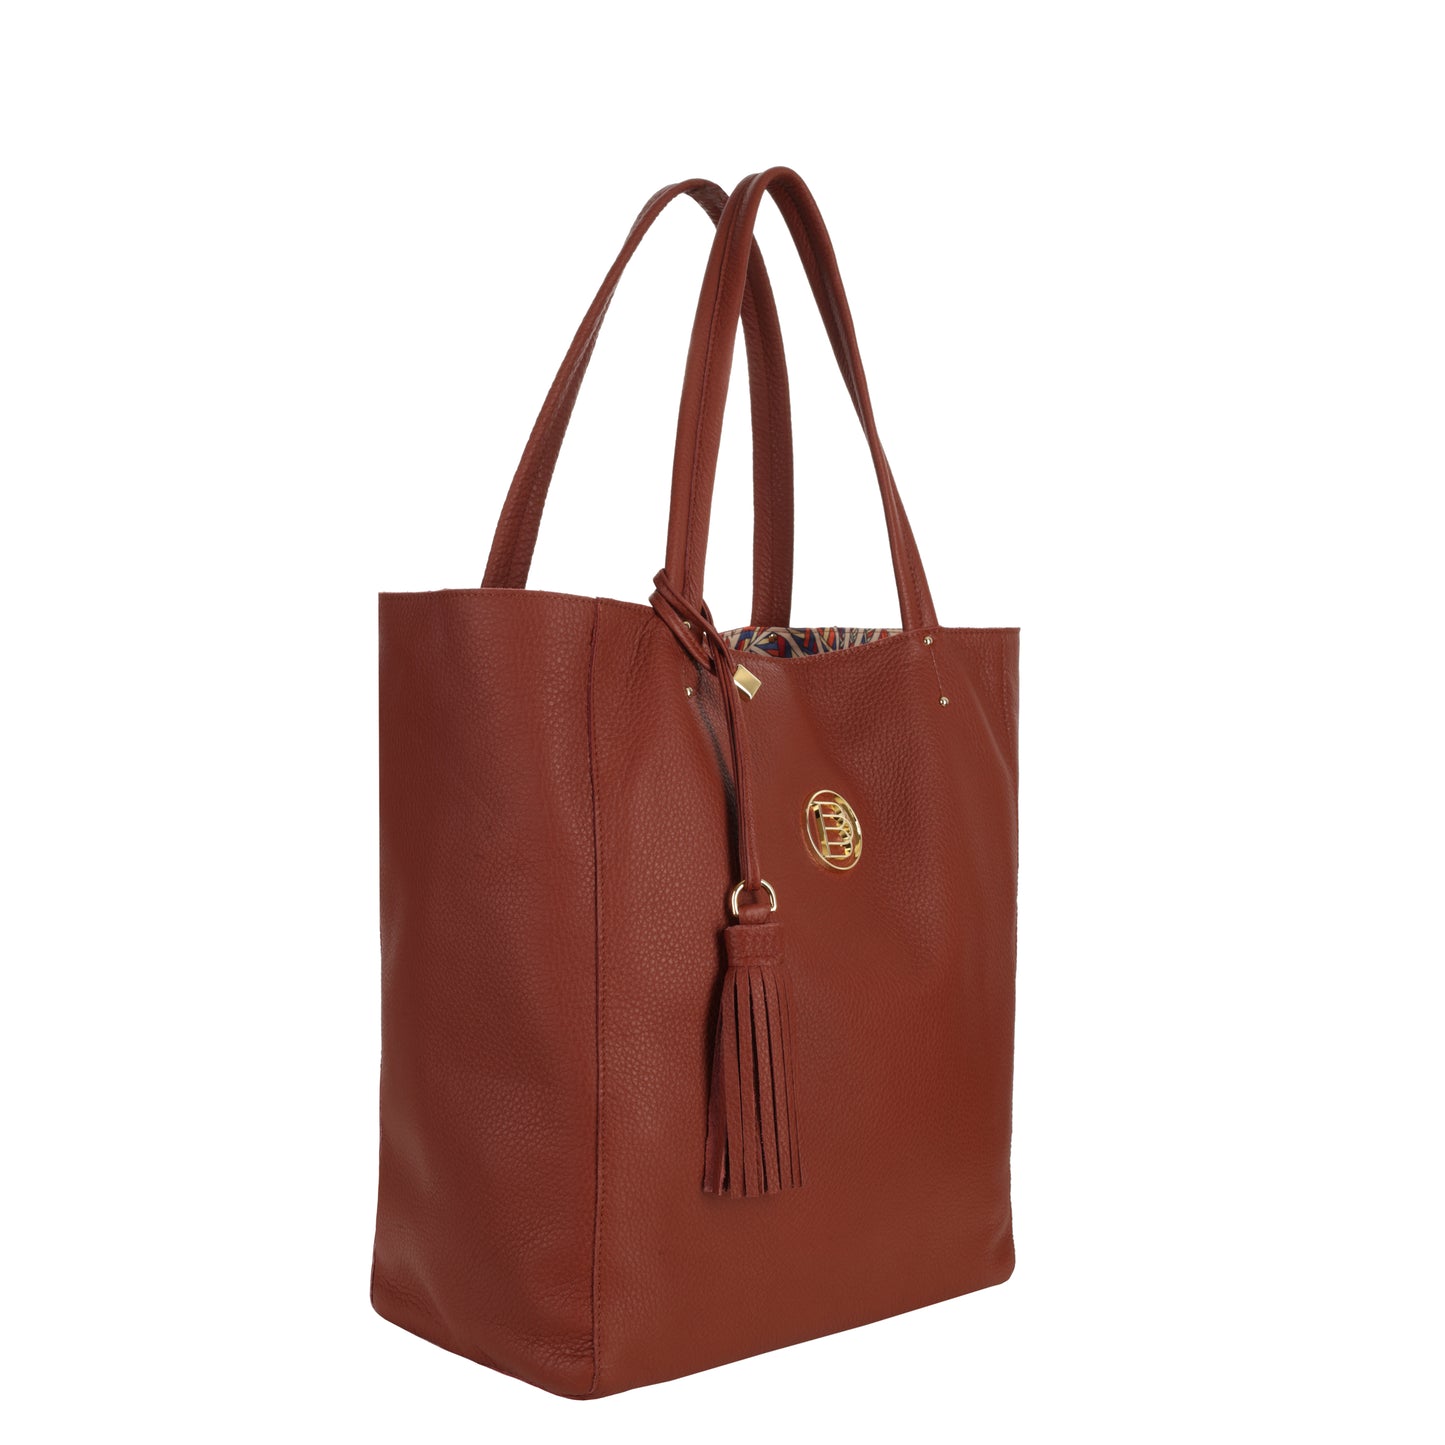 BAKU FLOTER BRANDY women's leather handbag